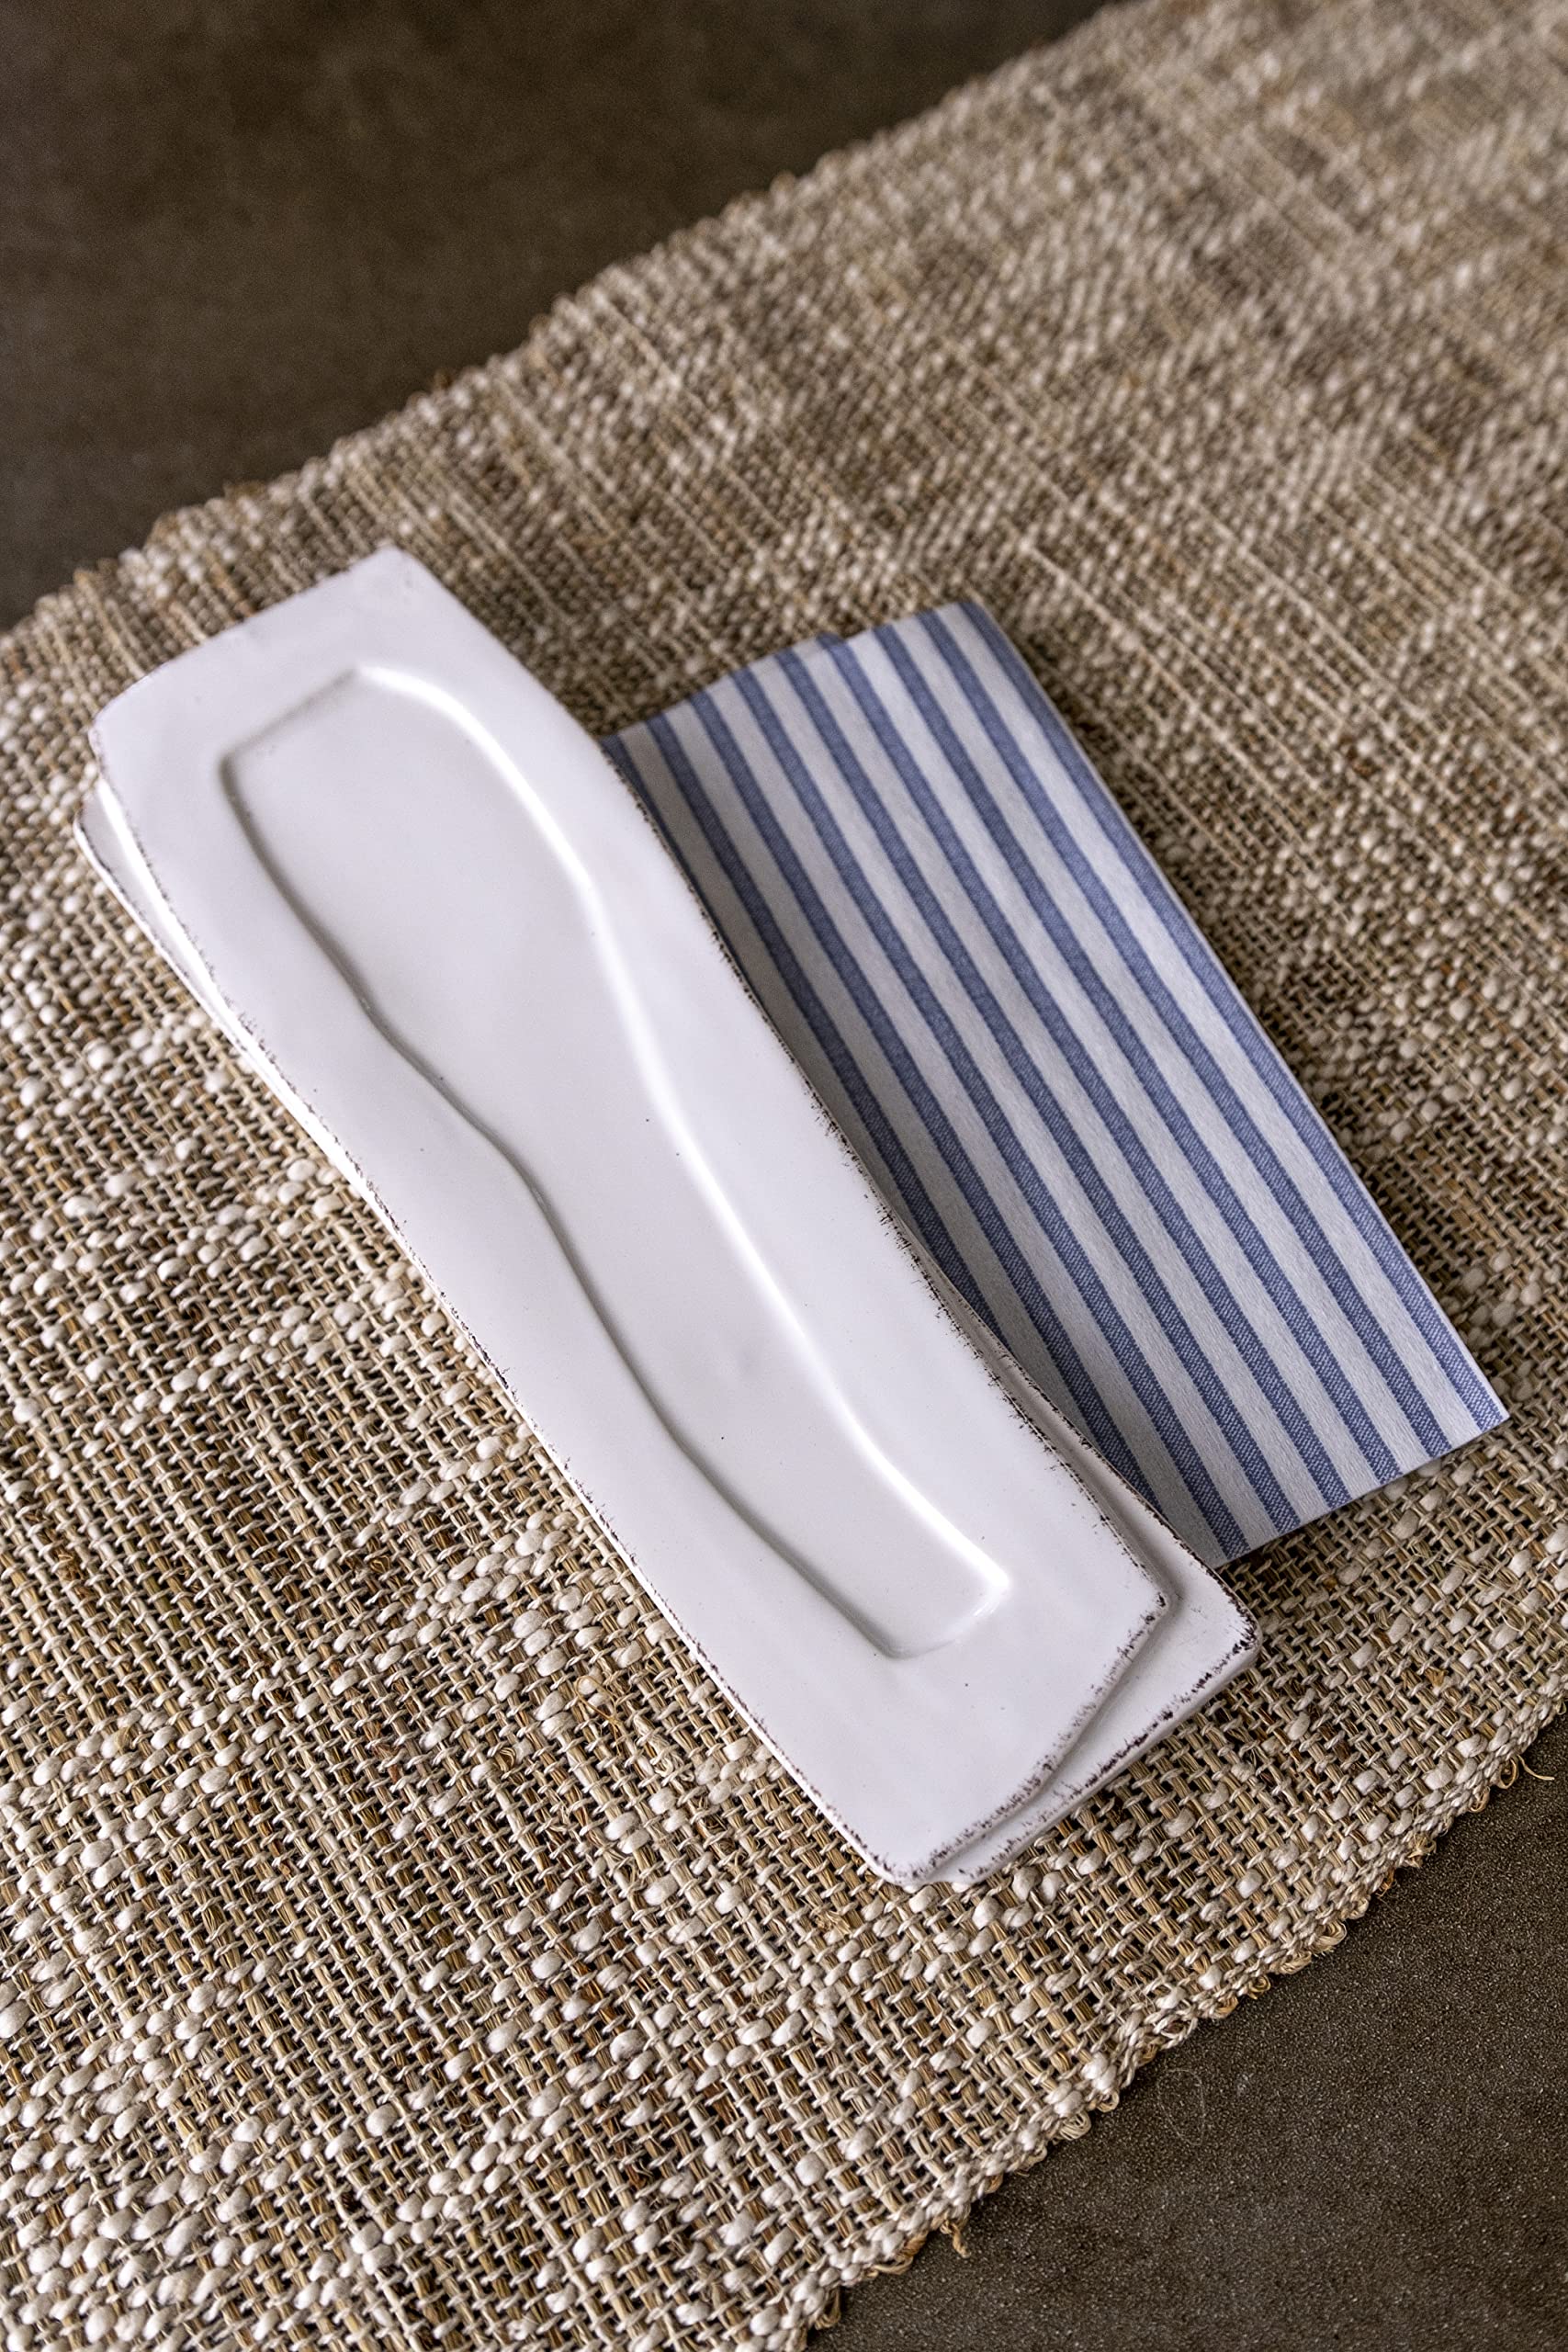 Vietri Lastra White Spoon Rest, 11" Ceramic Cooking/Serving Utensil Tray, Stove/Counter Decor